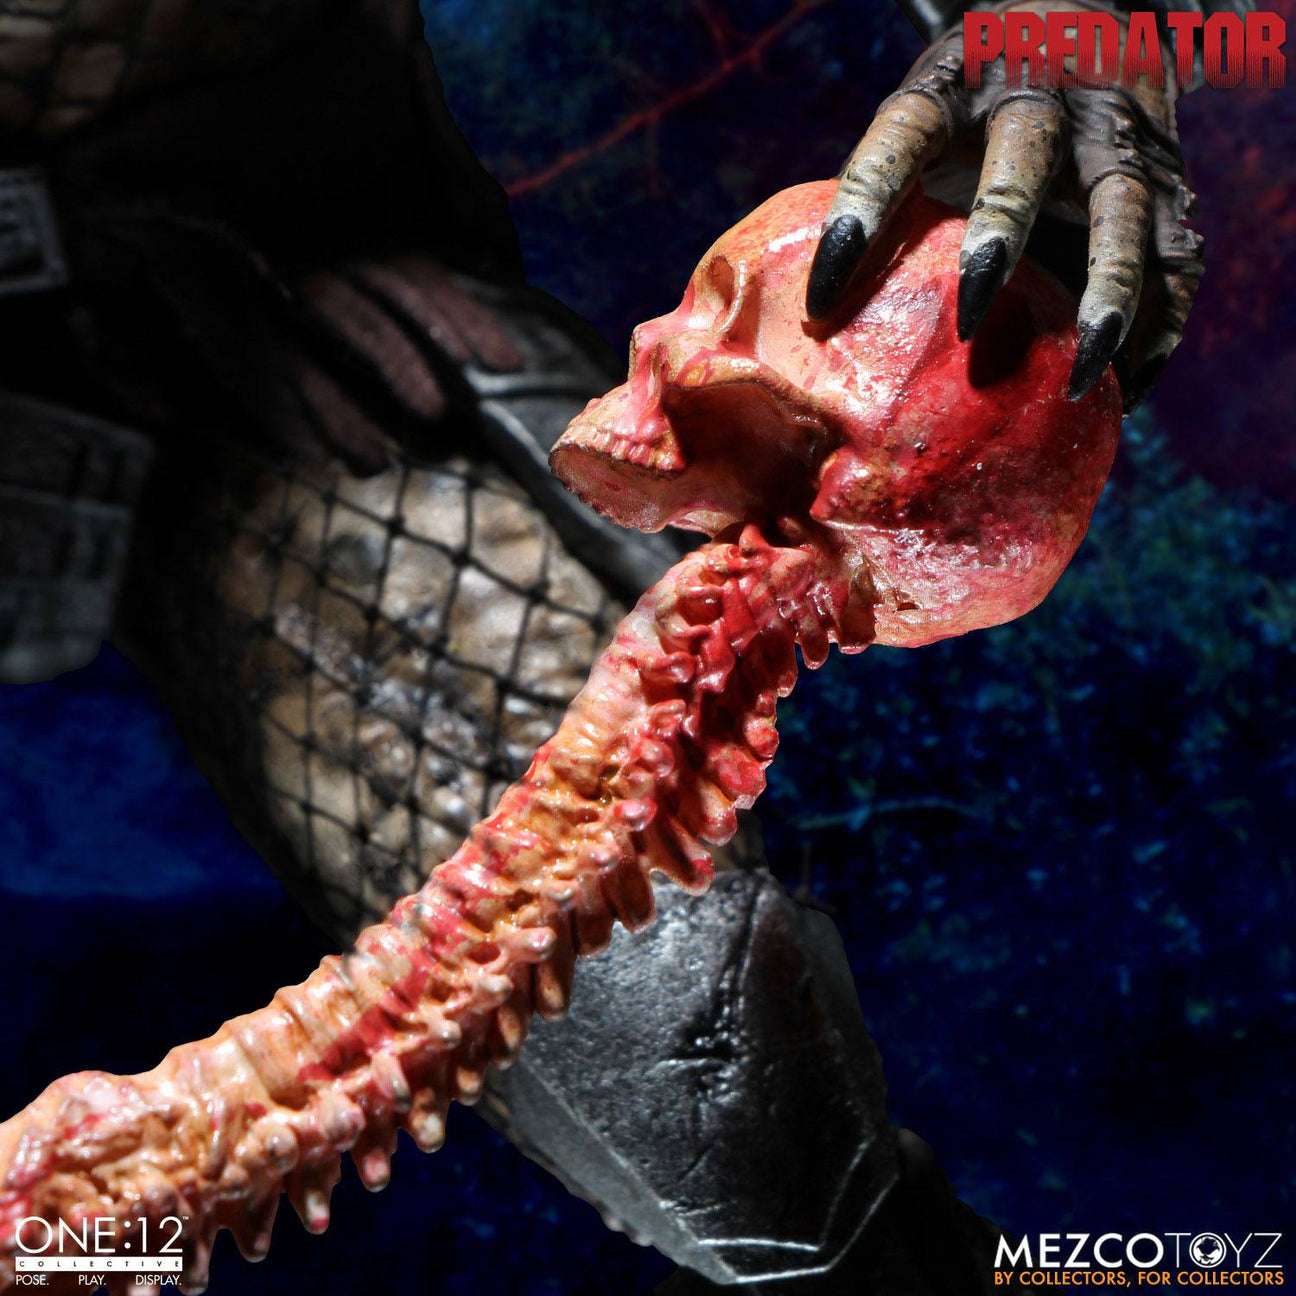 Predator Deluxe Edition - 1:12-Actionfiguren-Mezco Toys-Mighty Underground